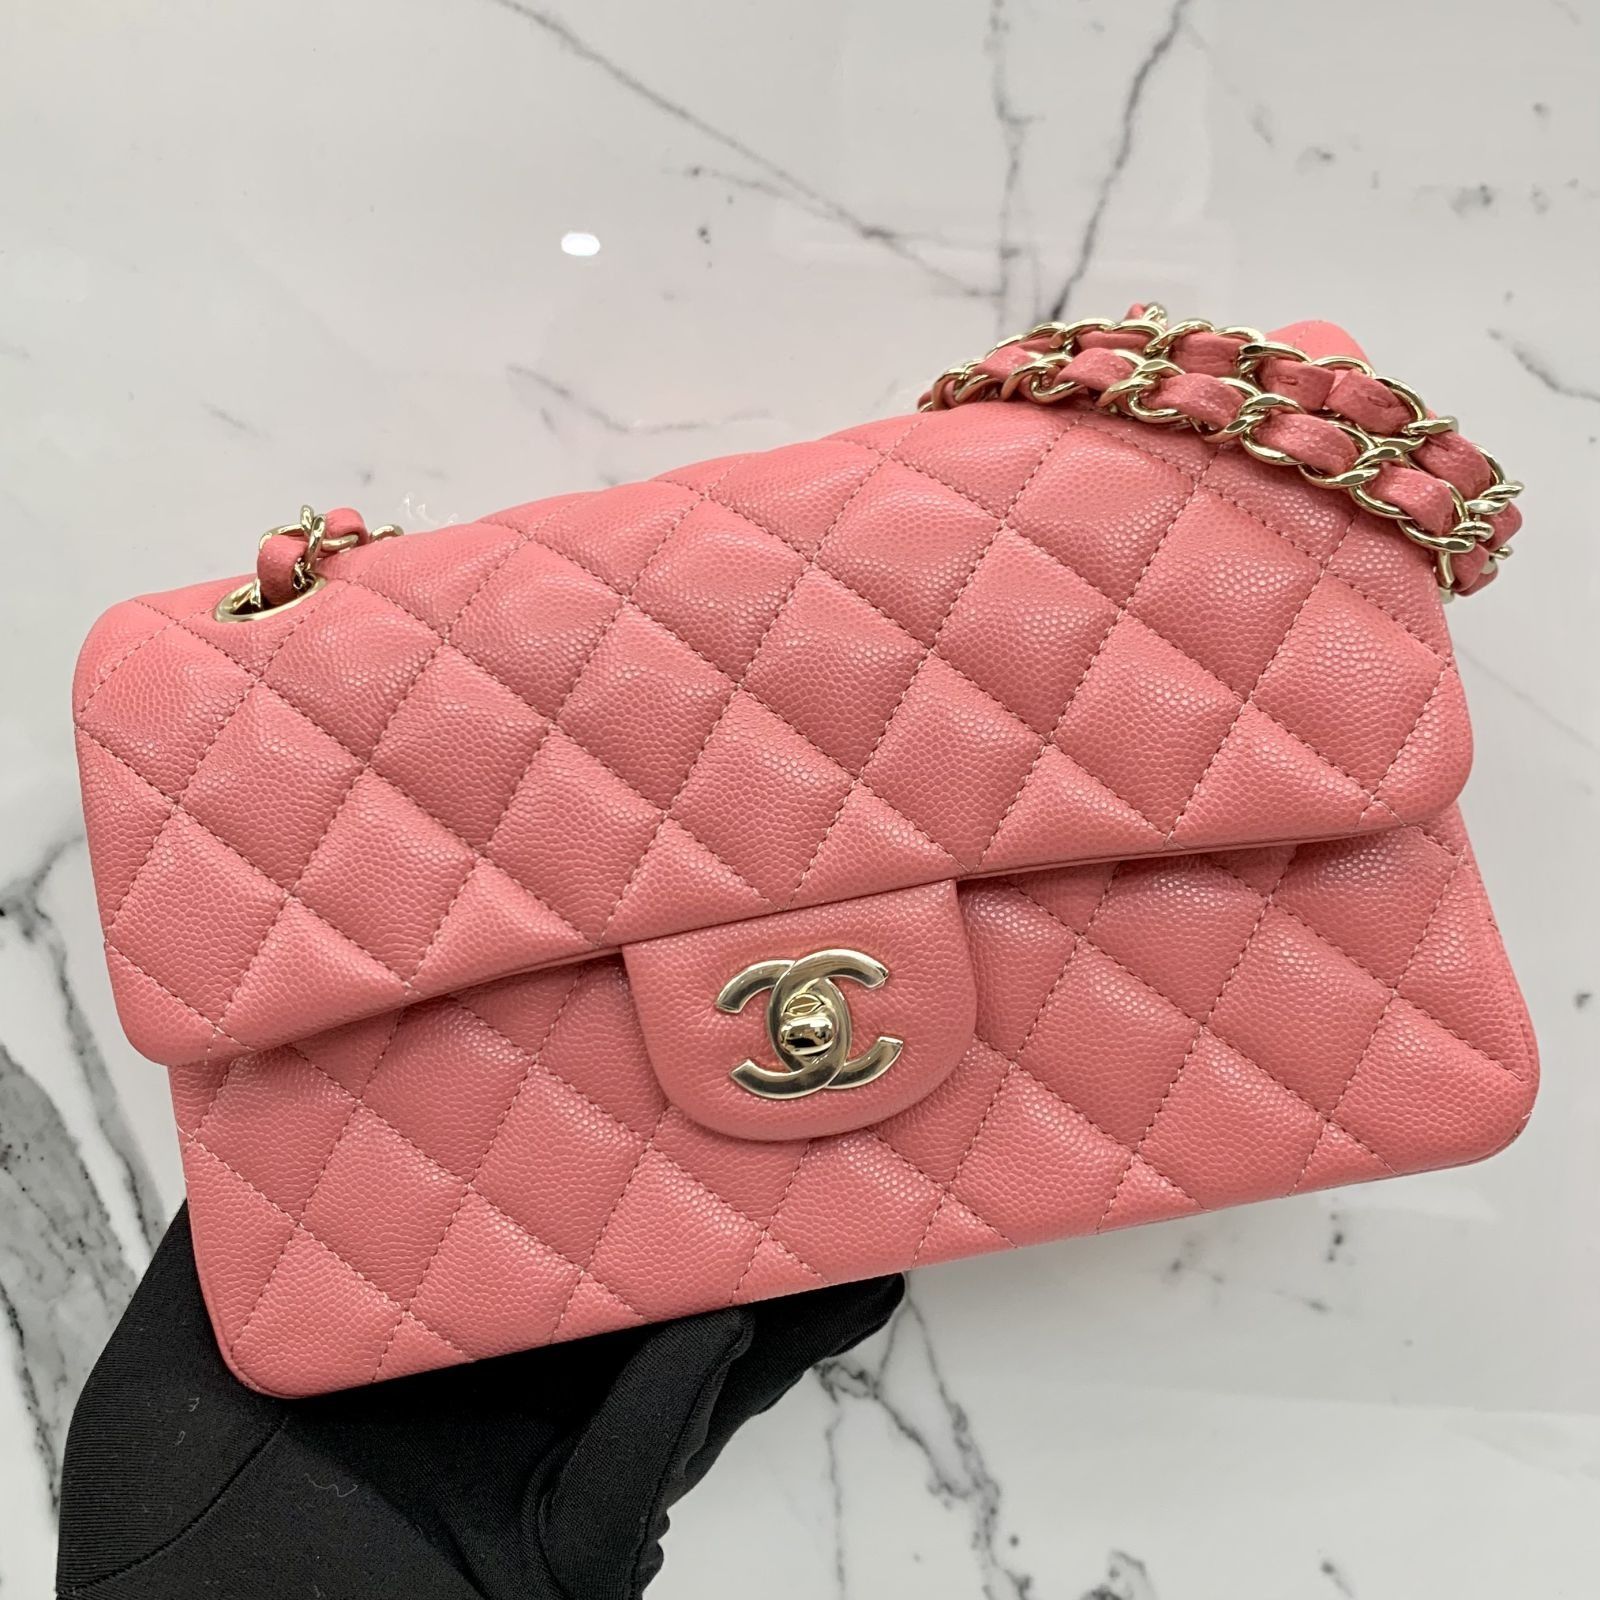 Shop CHANEL MATELASSE Small Classic Handbag (Reference: A01113